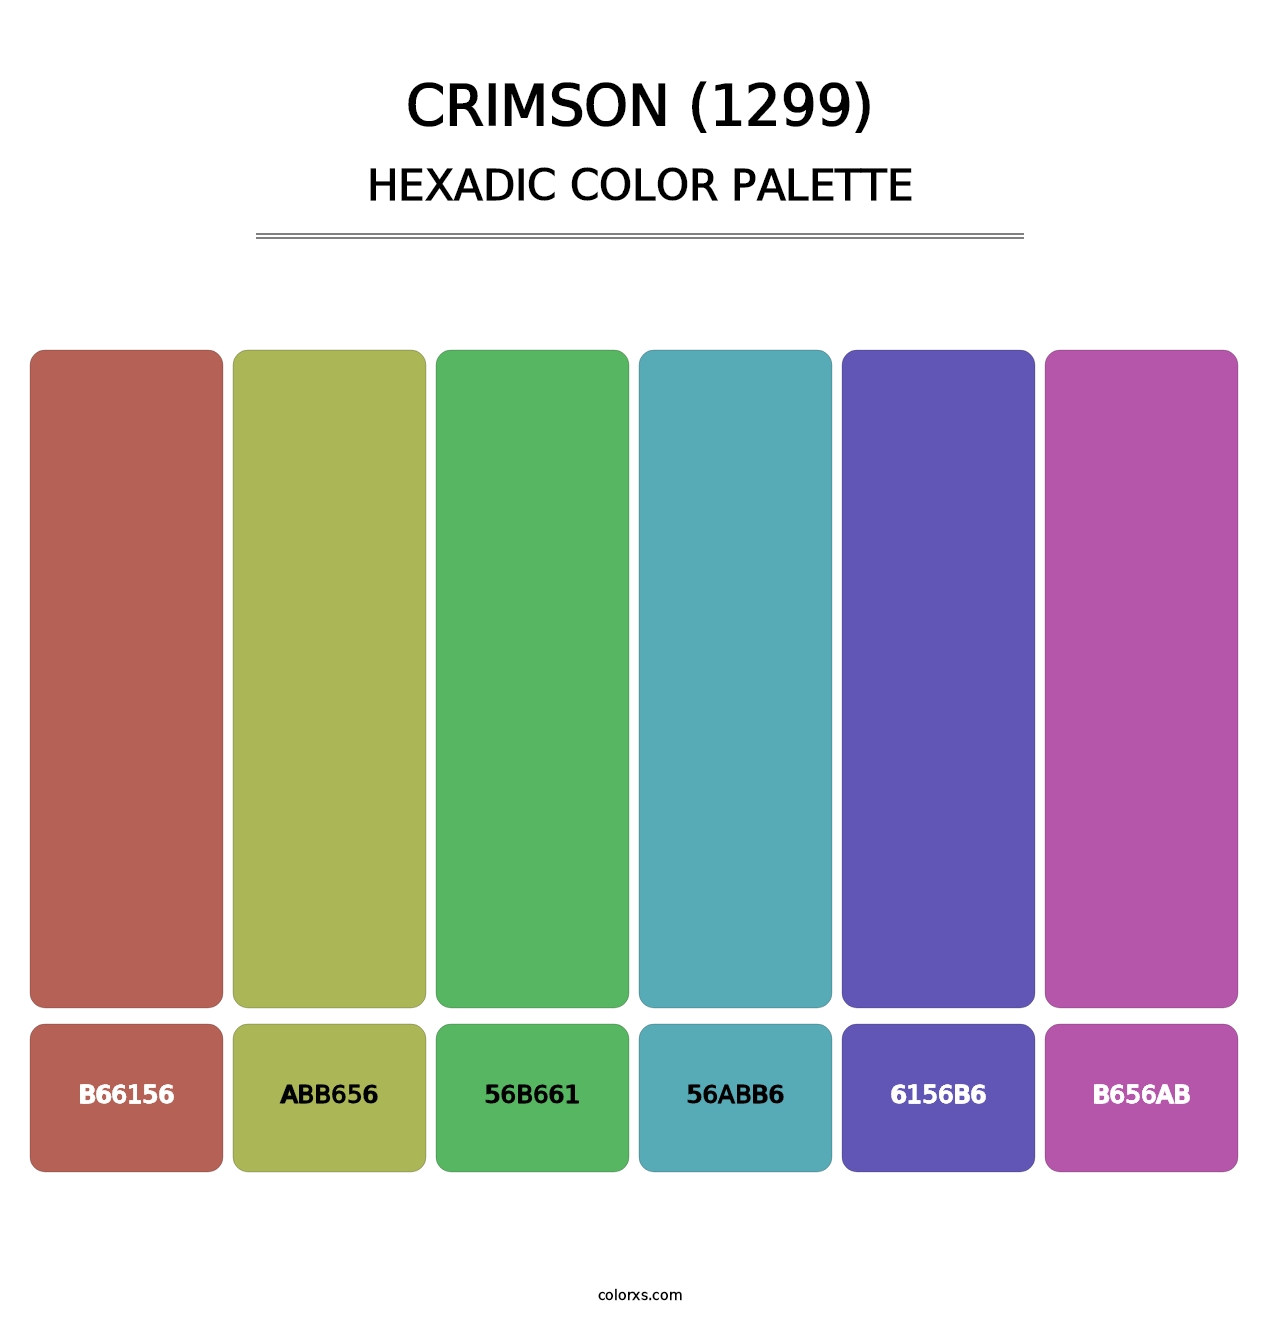 Crimson (1299) - Hexadic Color Palette